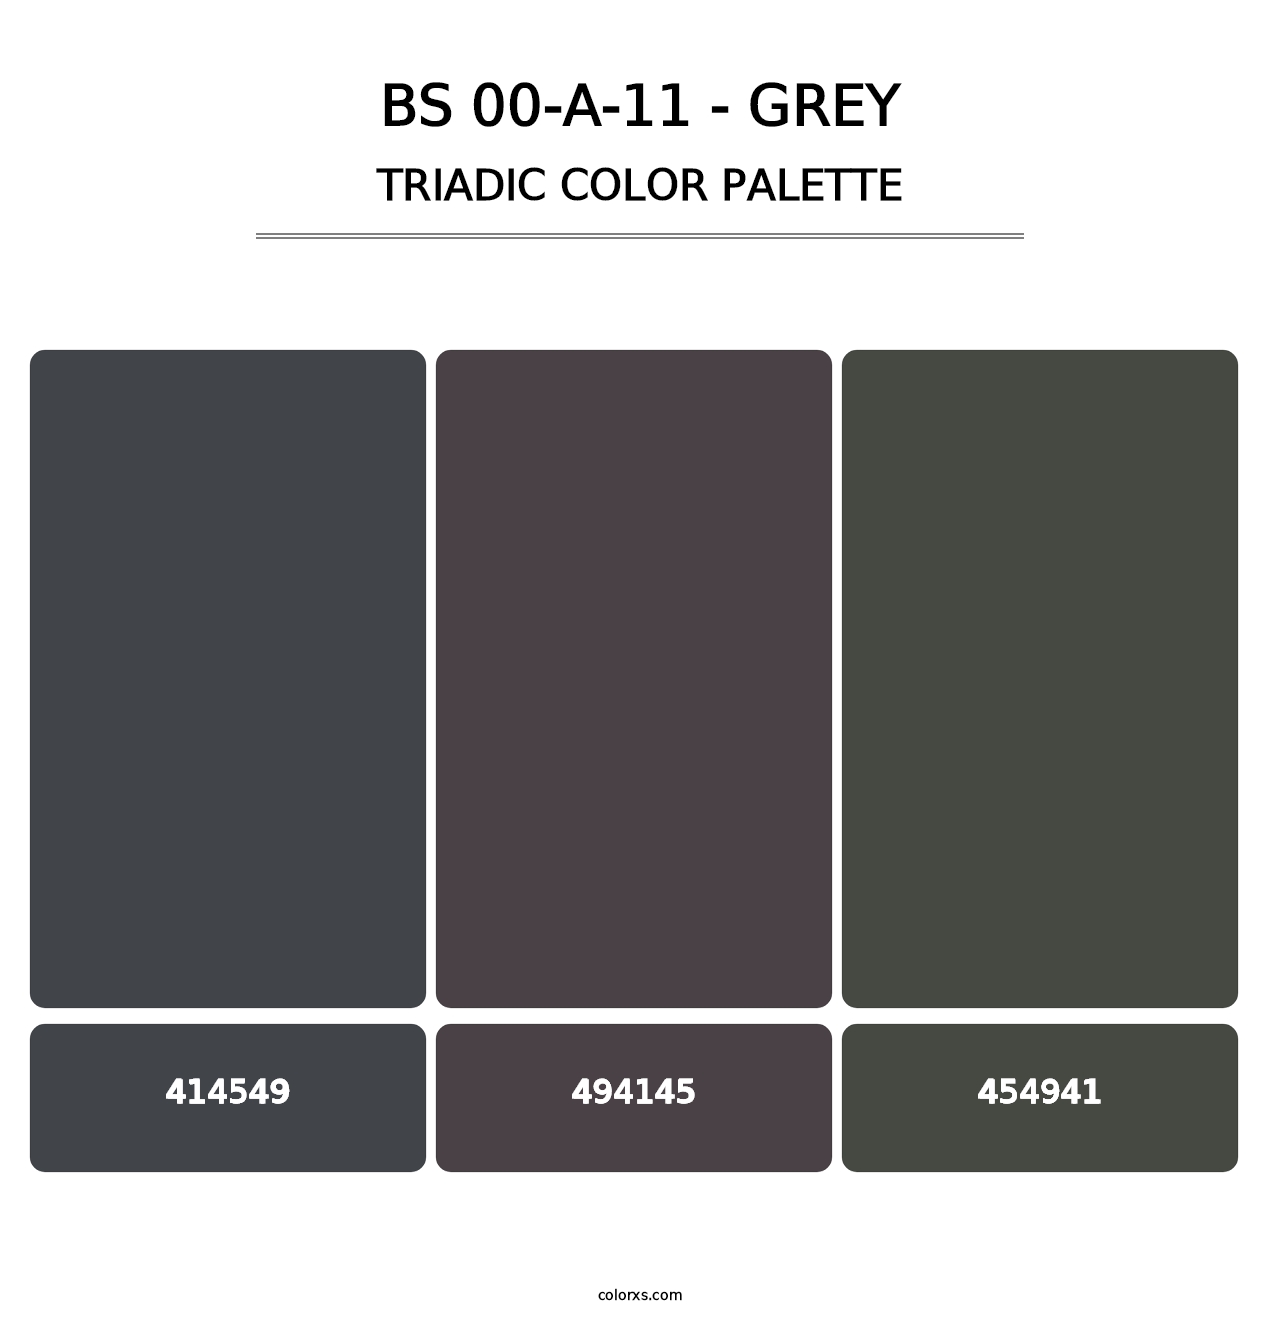 BS 00-A-11 - Grey - Triadic Color Palette